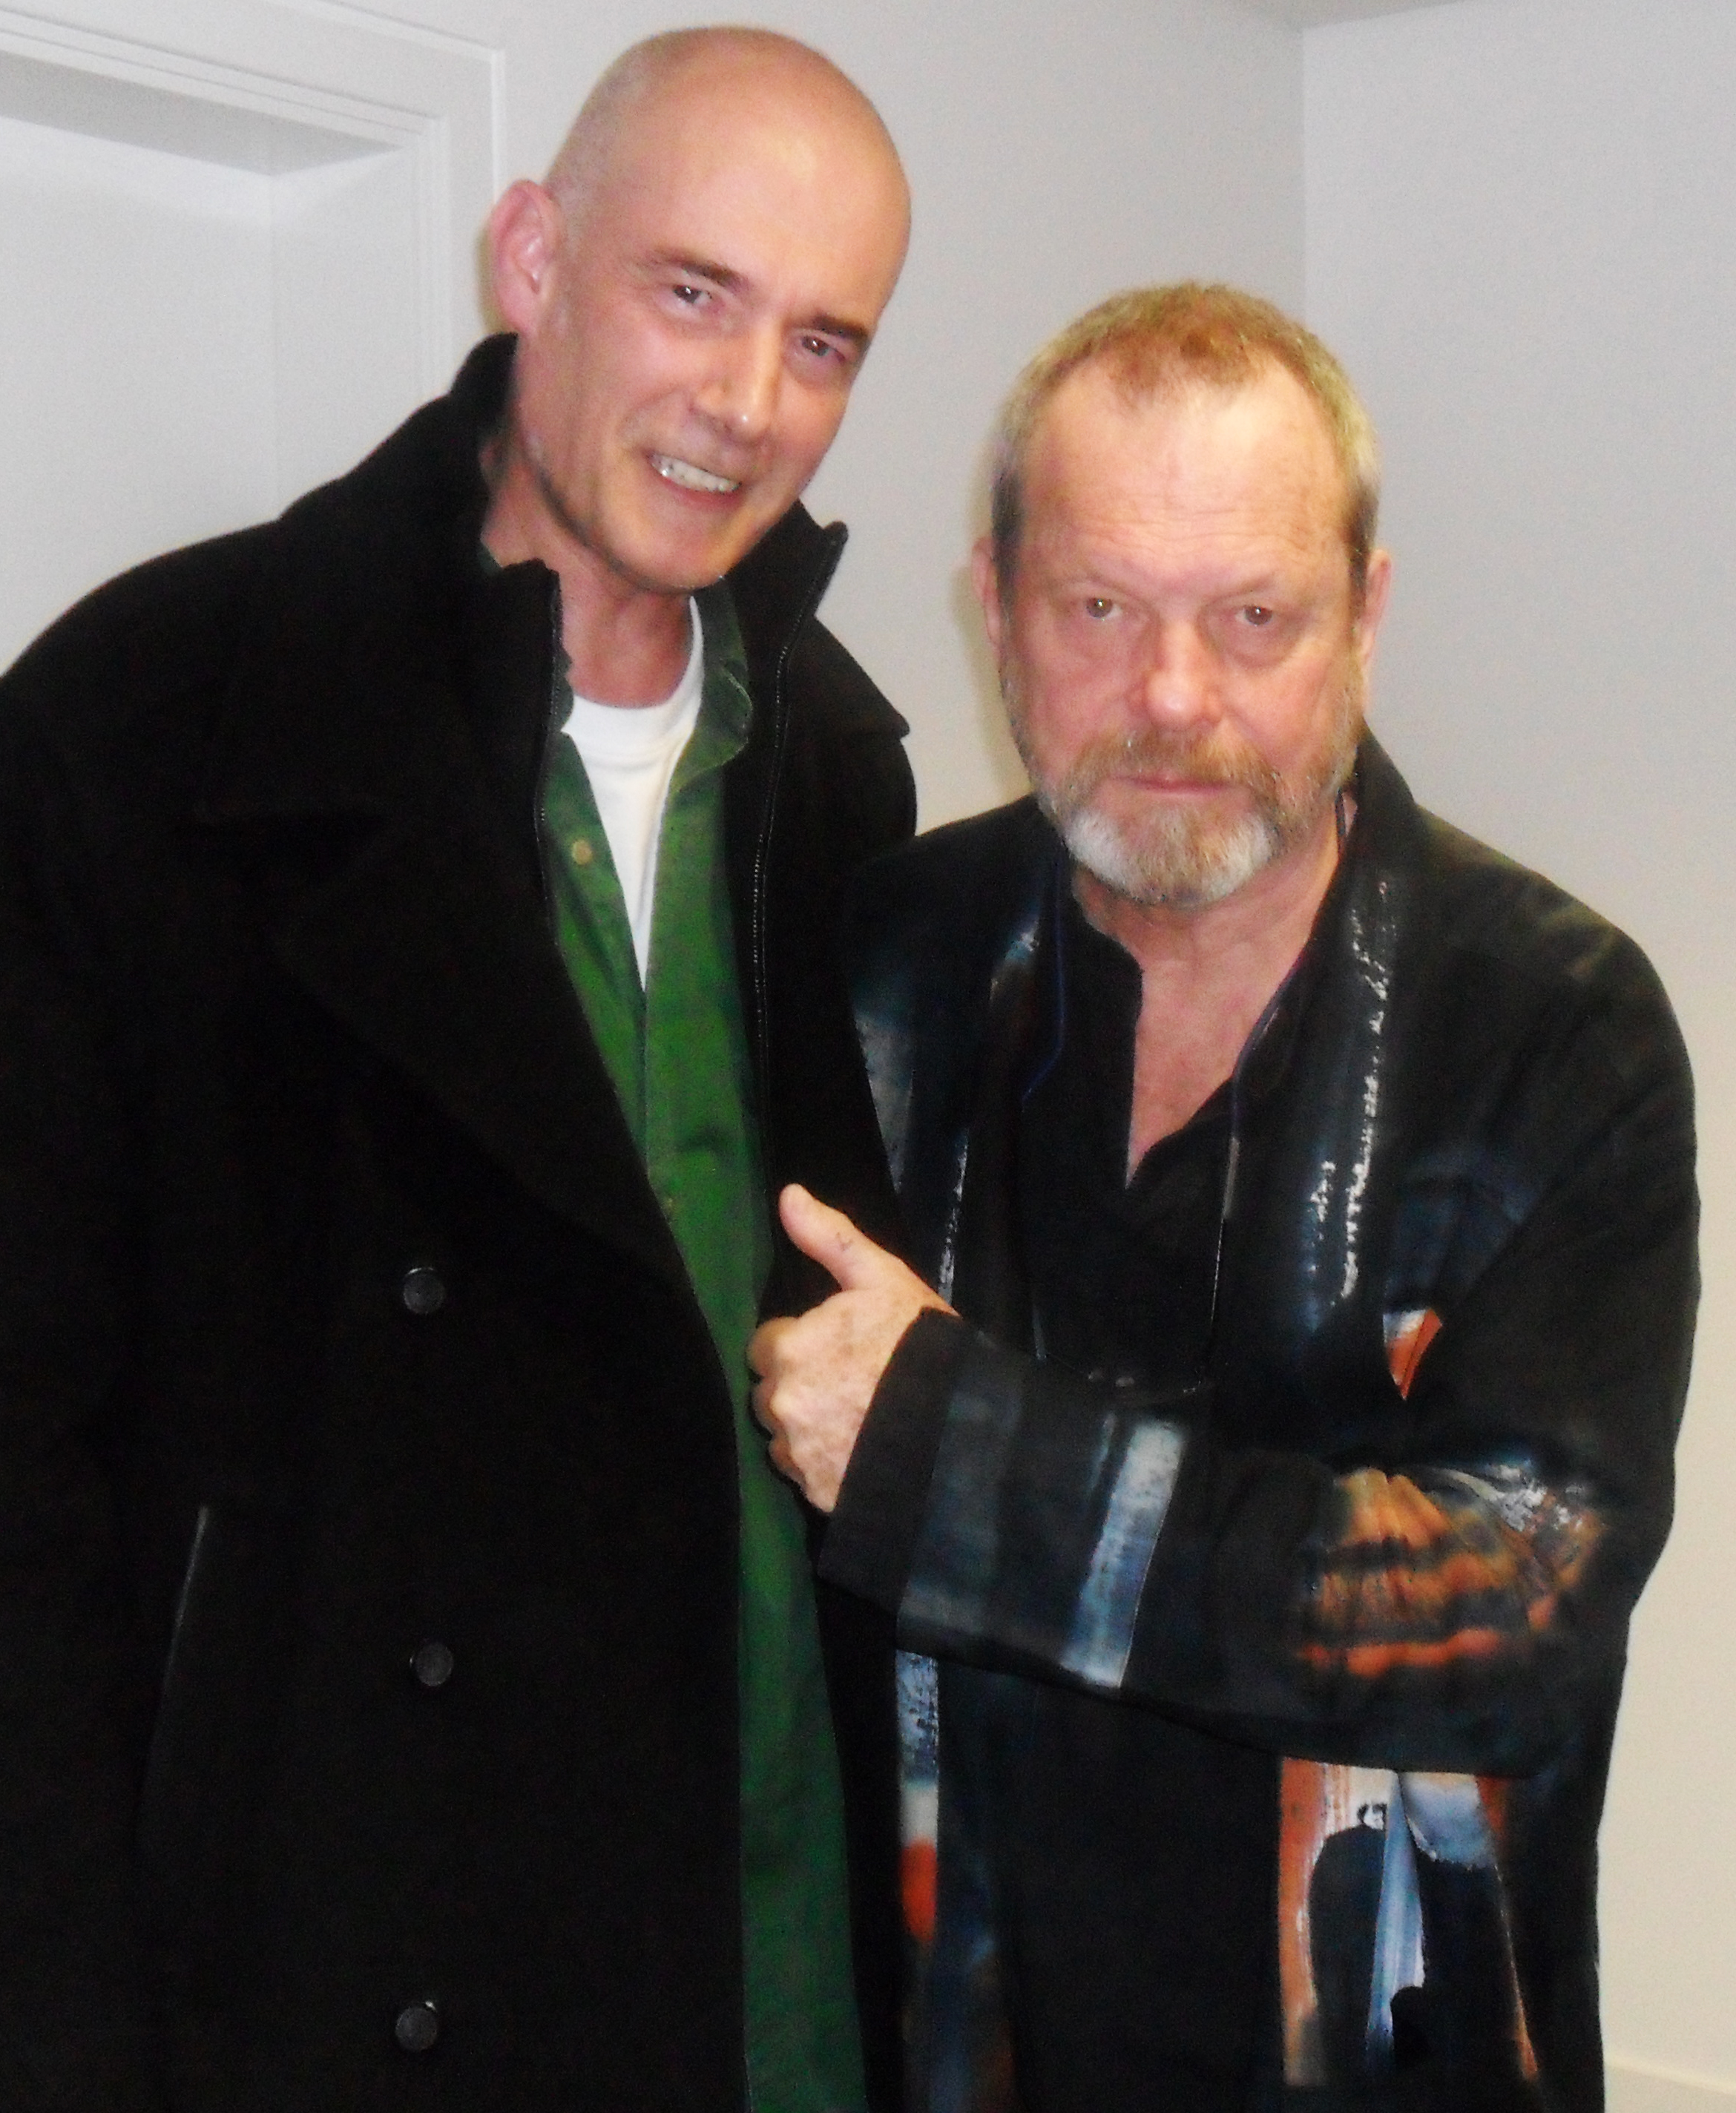 Ian Vernon and Terry Gilliam at the Bradford Film Festival 2011.